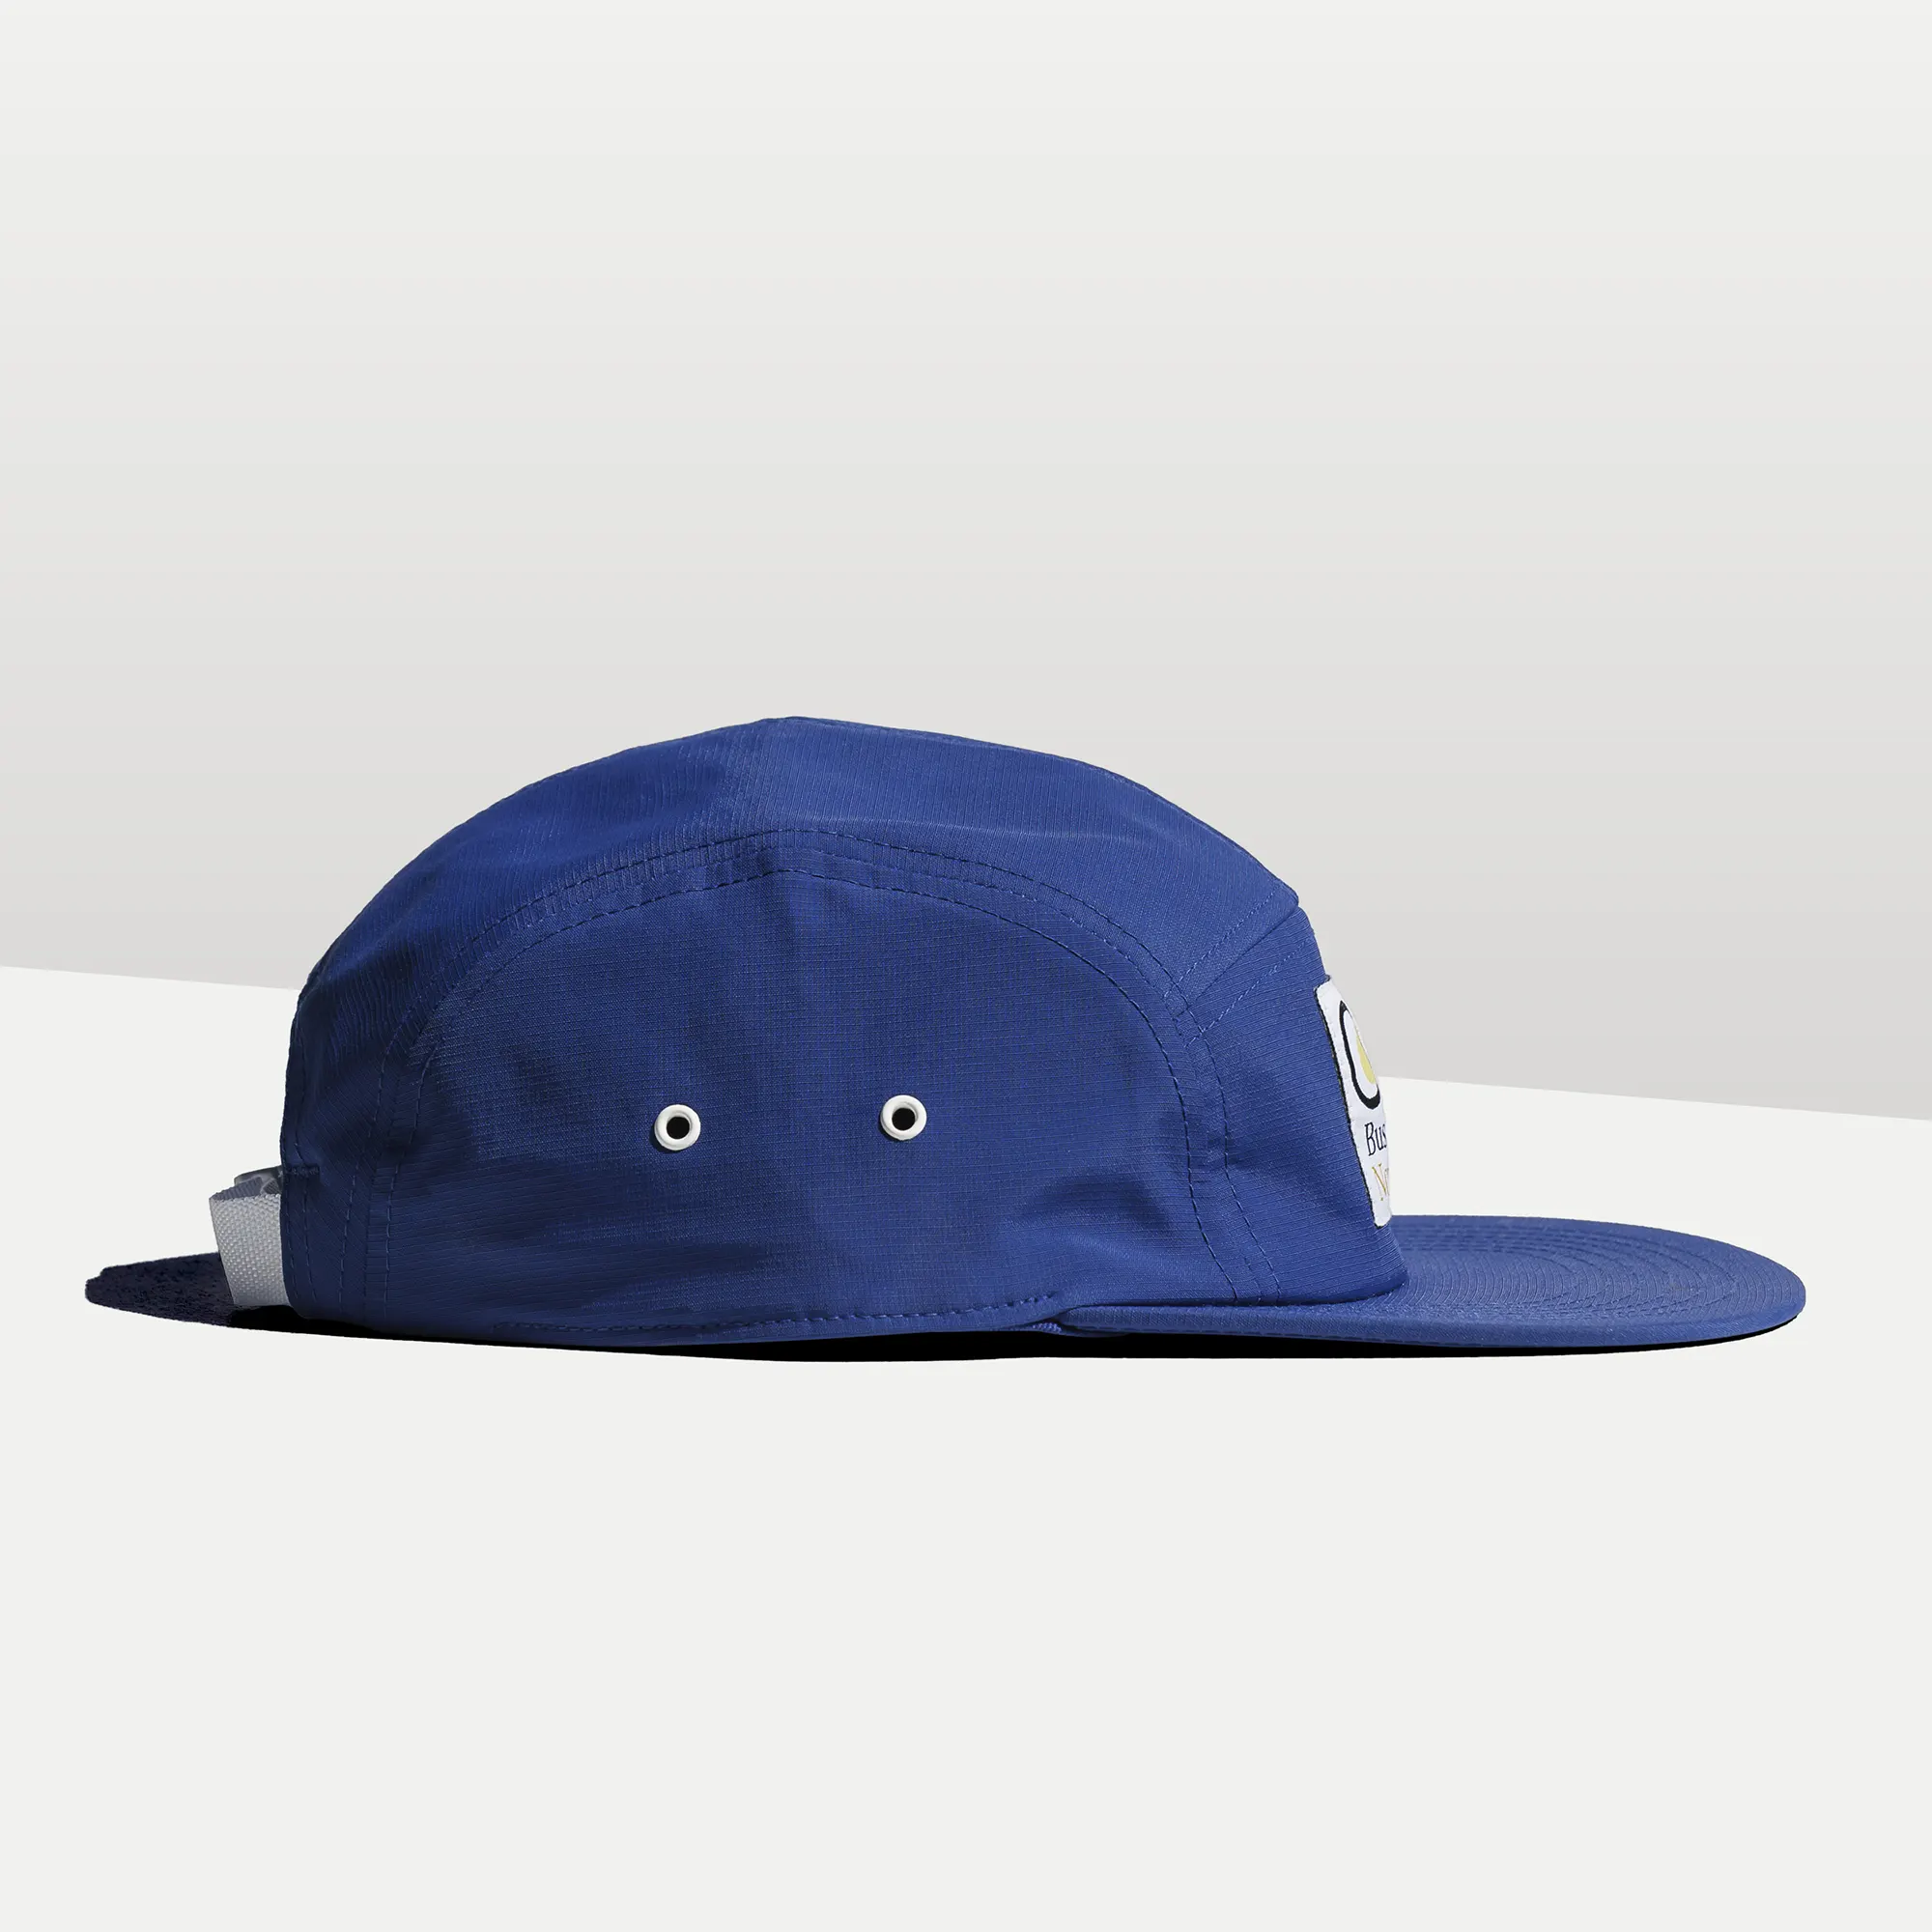 Entdecke die Hat of New Work von Business Nomad: stylishe 5-Panel-Cap aus Mini Ripstop Fabric in blau